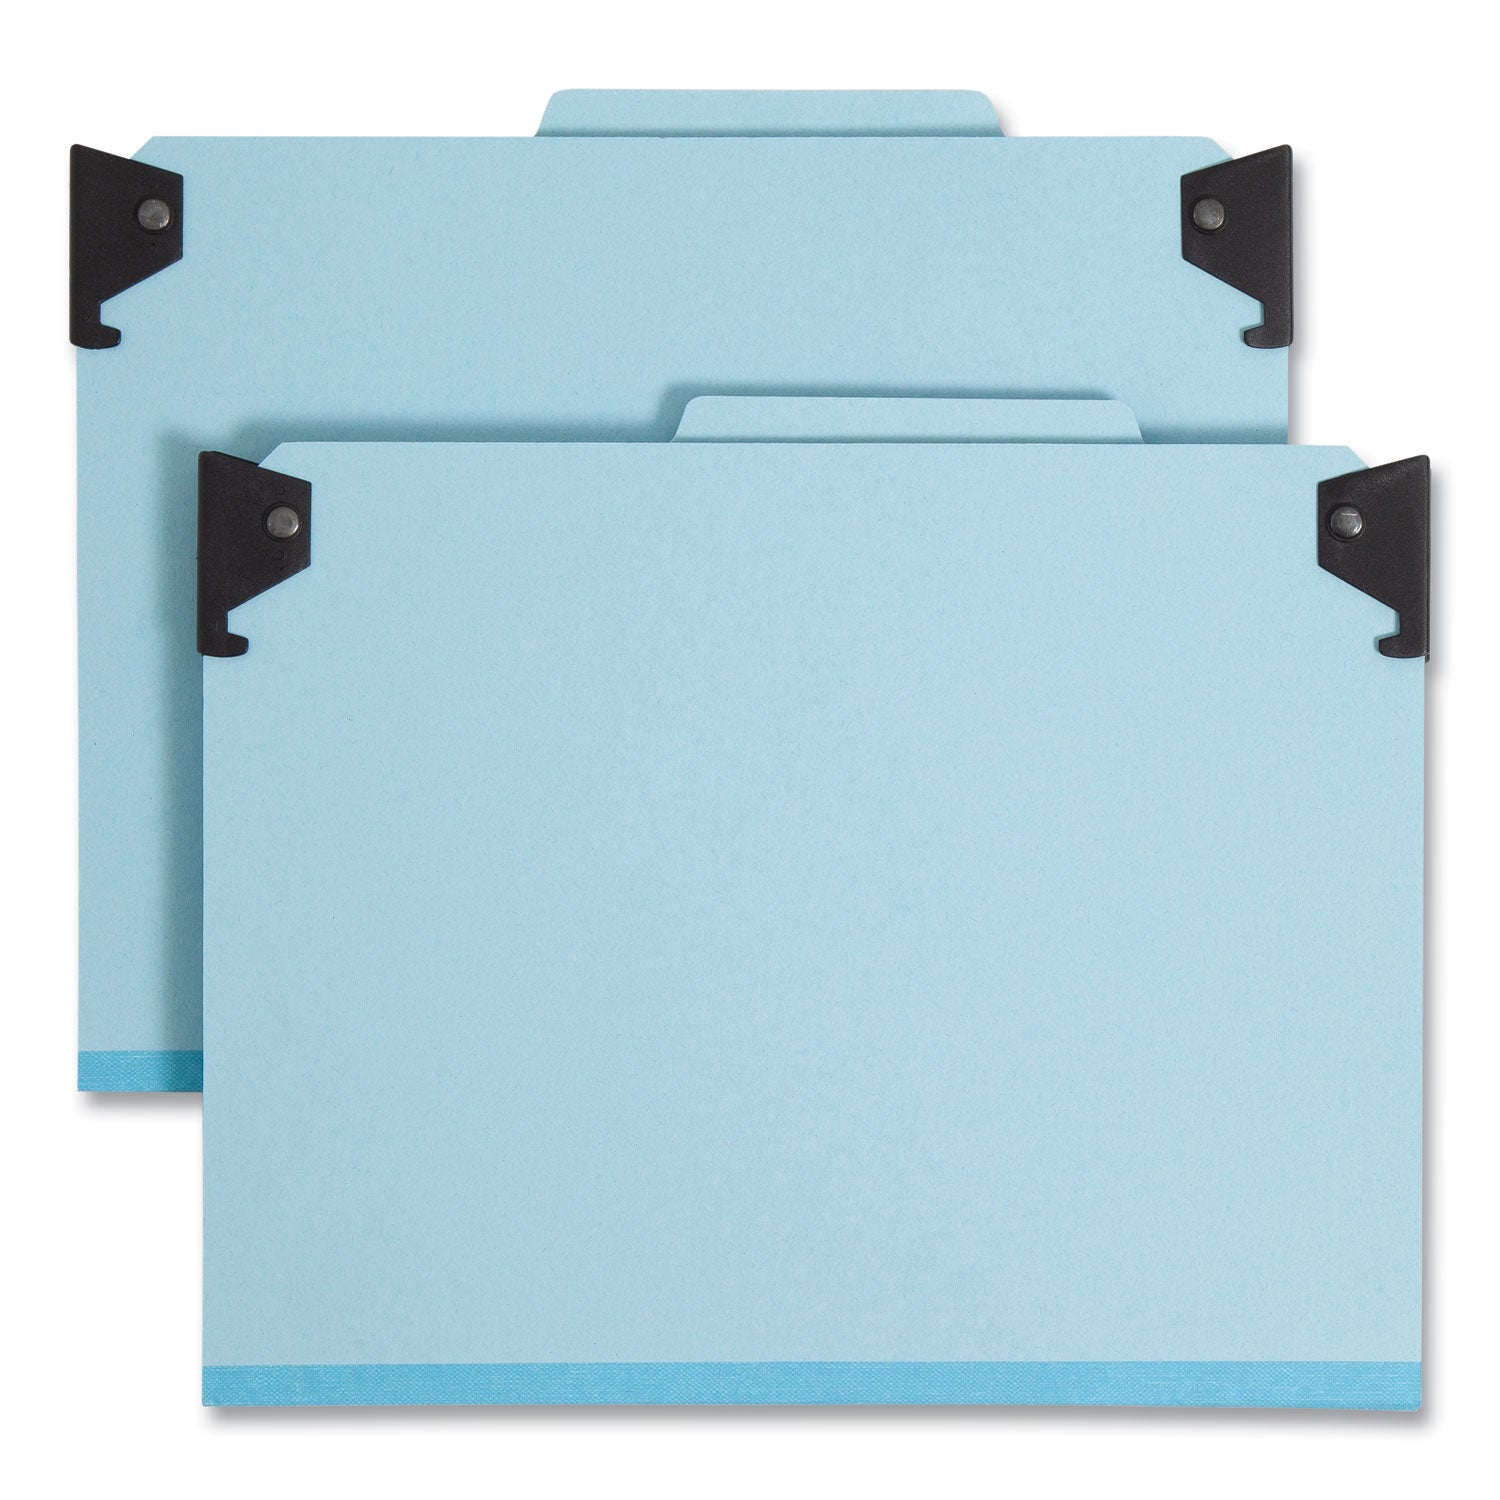 FasTab Hanging Pressboard Classification Folders, 2 Dividers, Letter Size, Blue - 